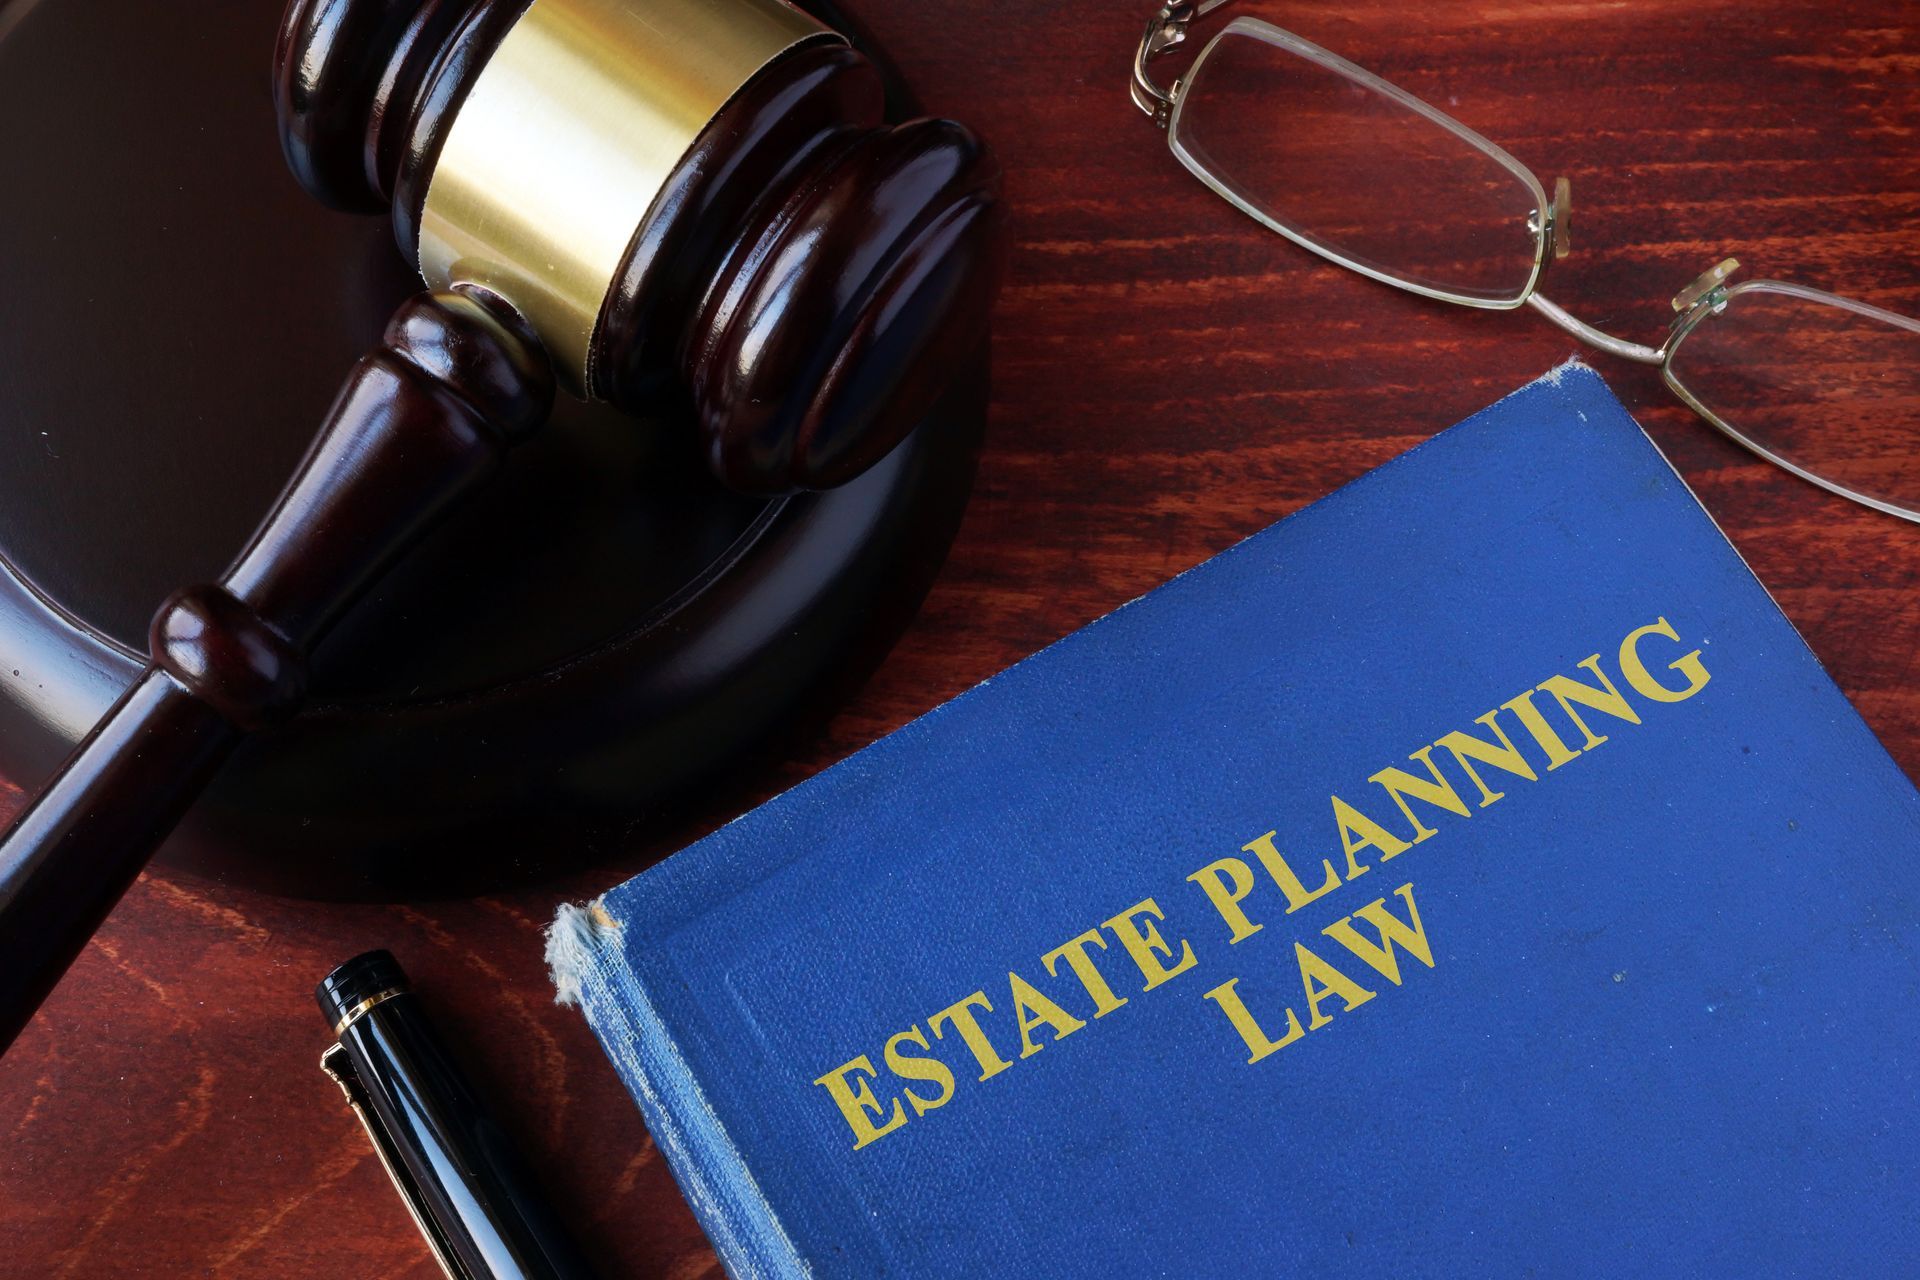 Estate Planning Law Book